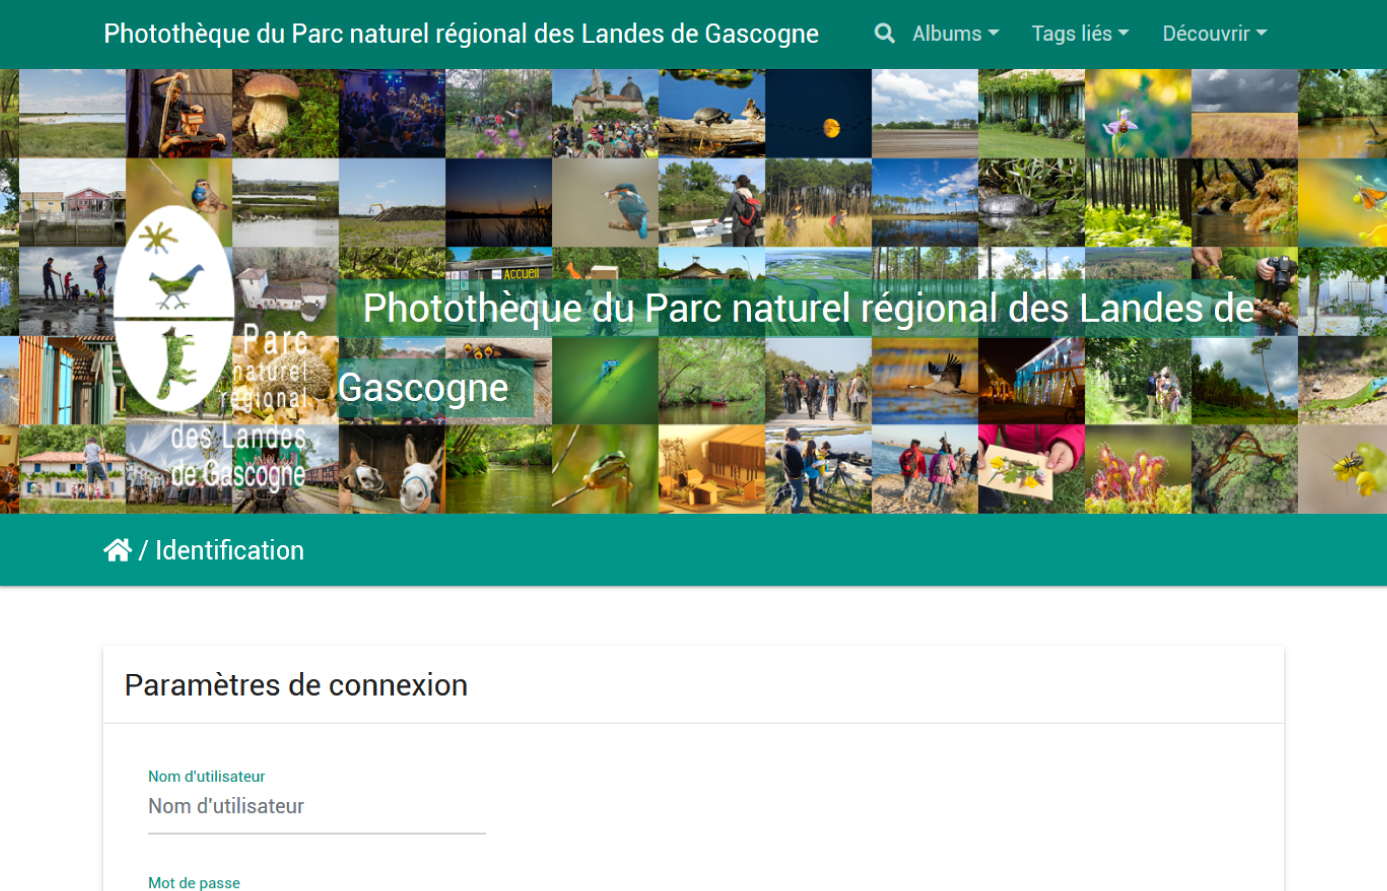 The Regional Natural Park Landes de Gascogne